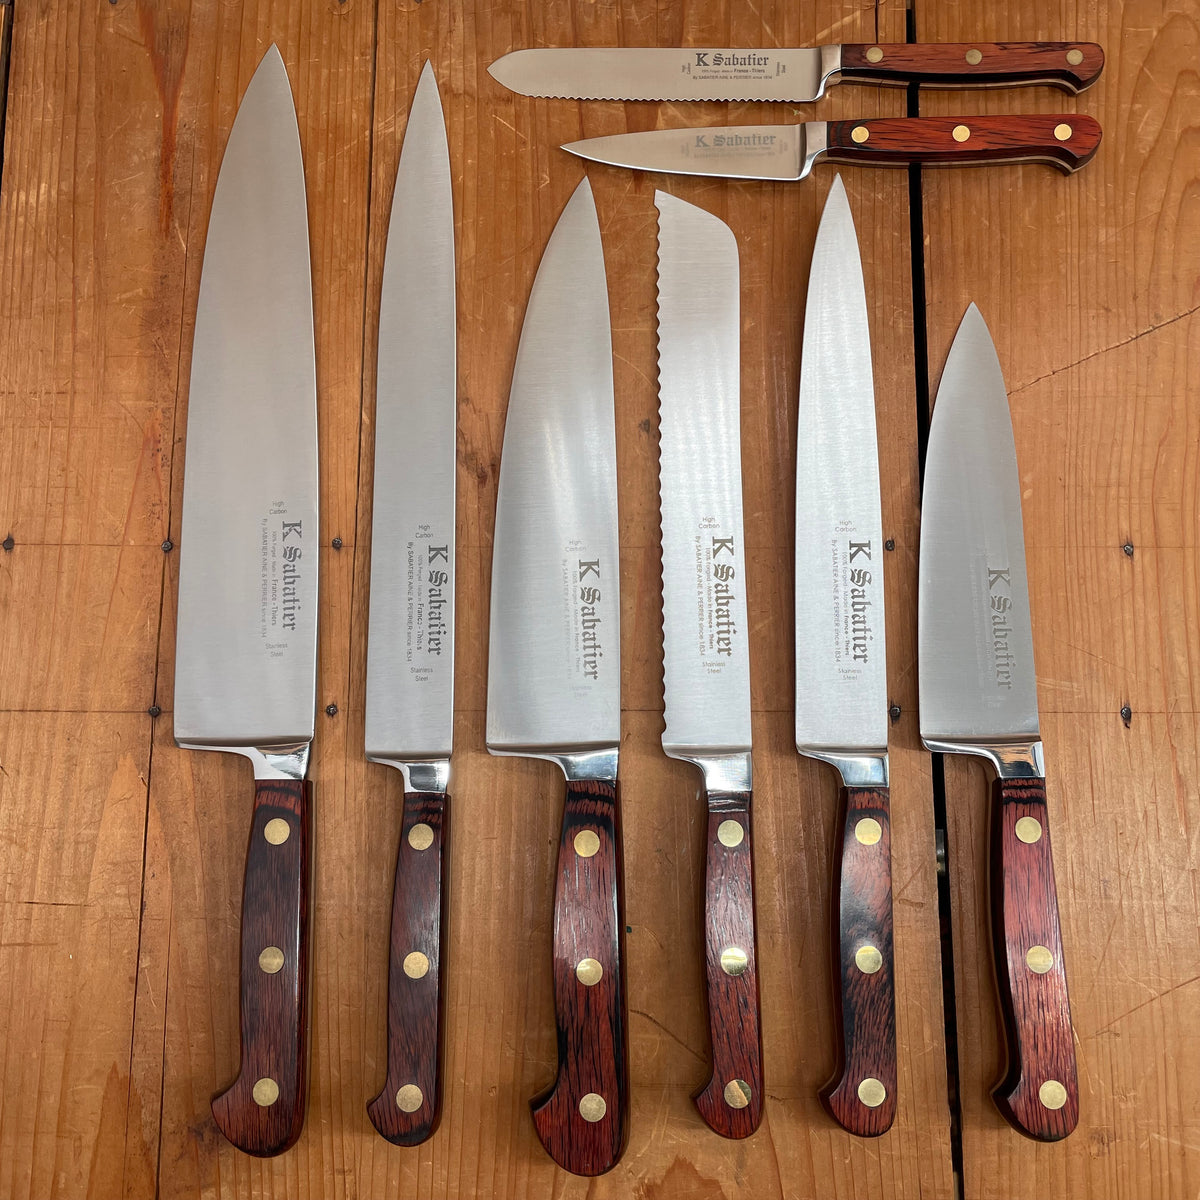 K Sabatier Auvergne Stainless Knife Set - 8 Pieces